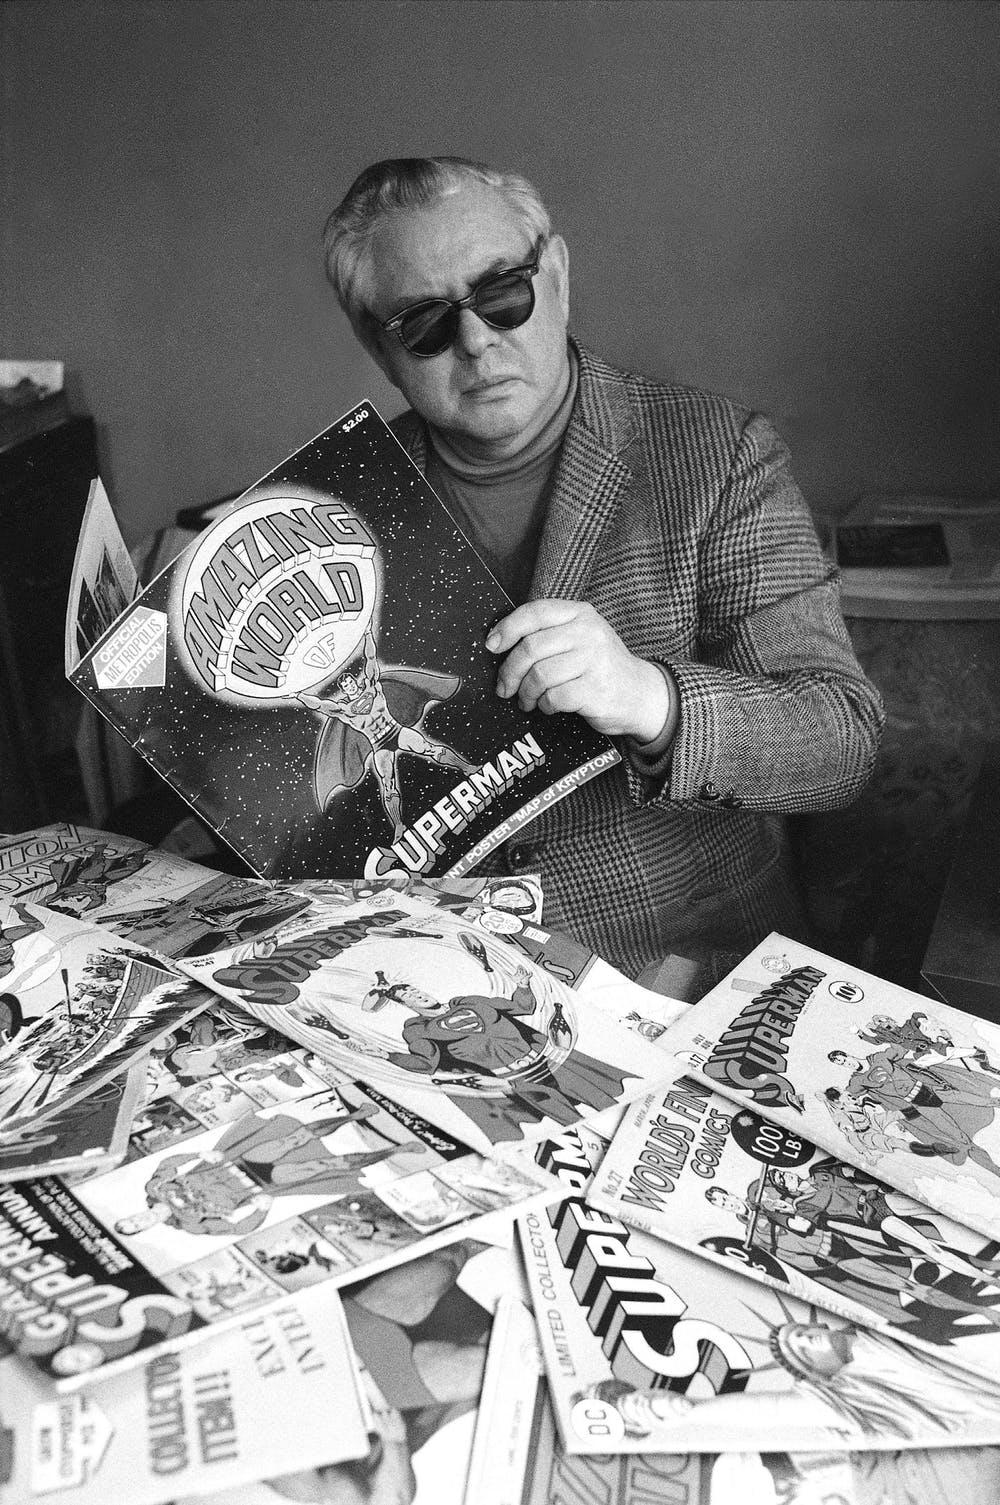 Joe Shuster with Superman comic books